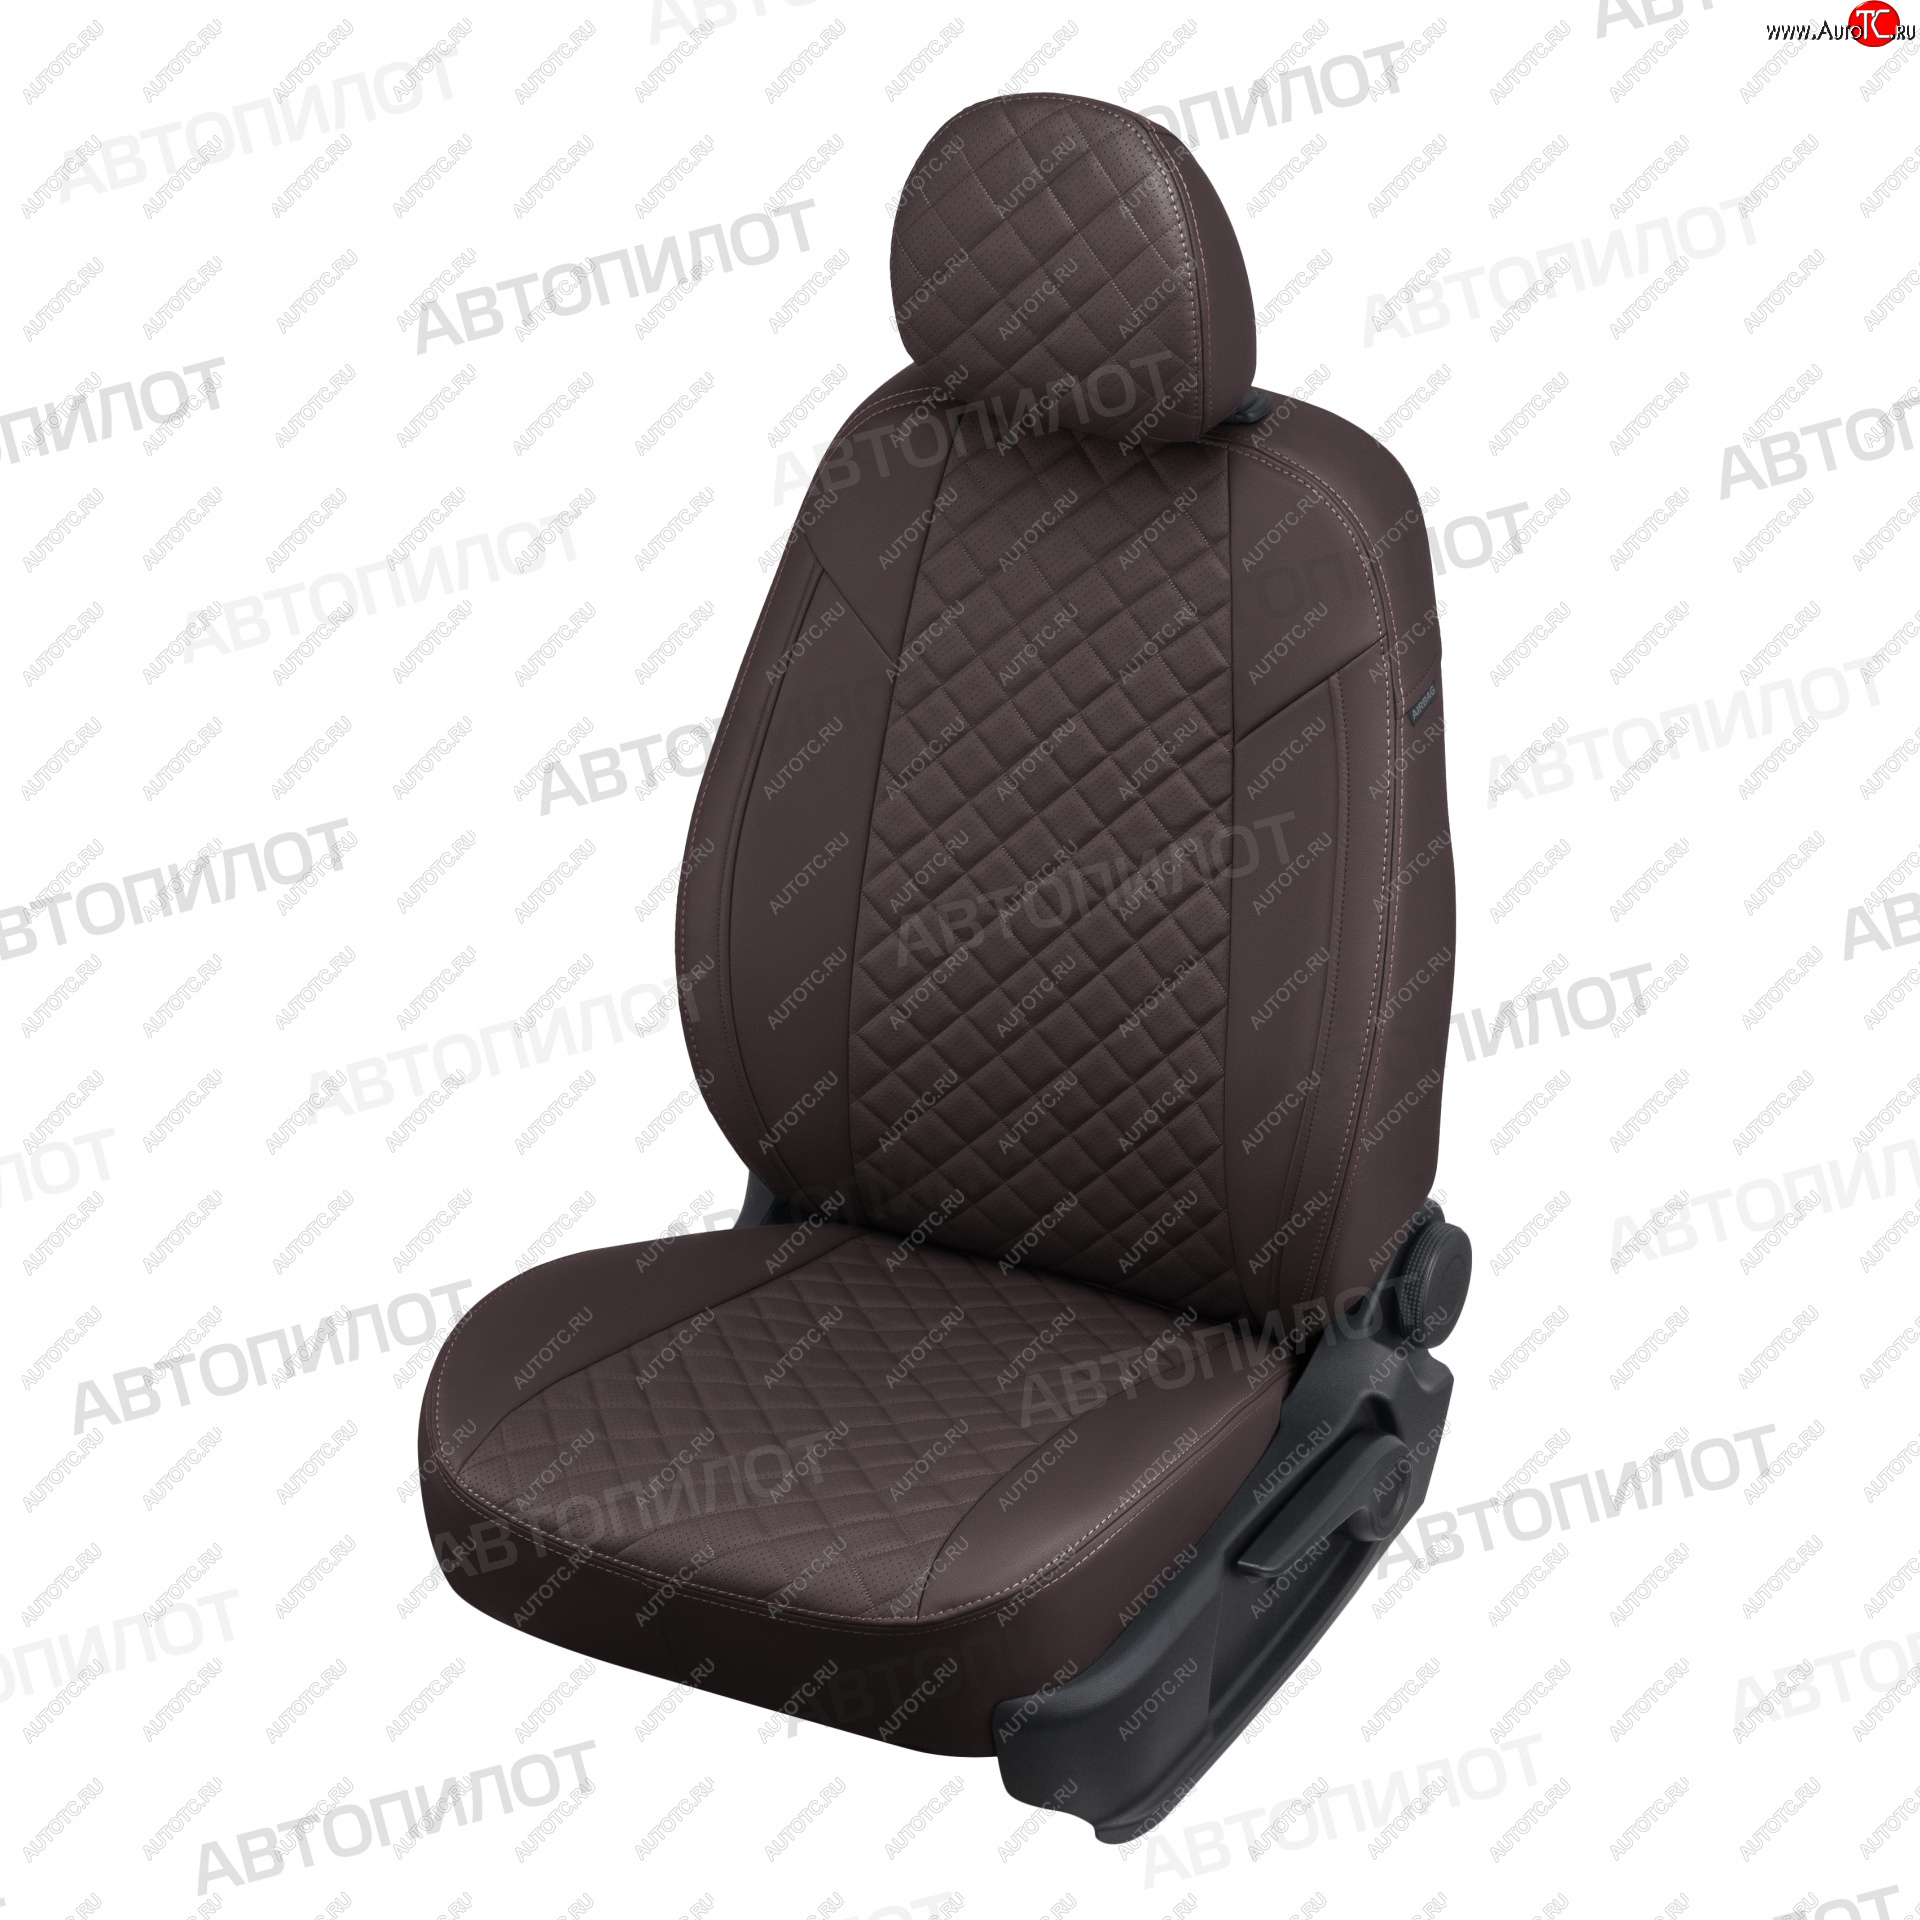 13 999 р. Чехлы сидений (экокожа) Автопилот Ромб  BMW 1 серия  F21 (2011-2020) (шоколад)